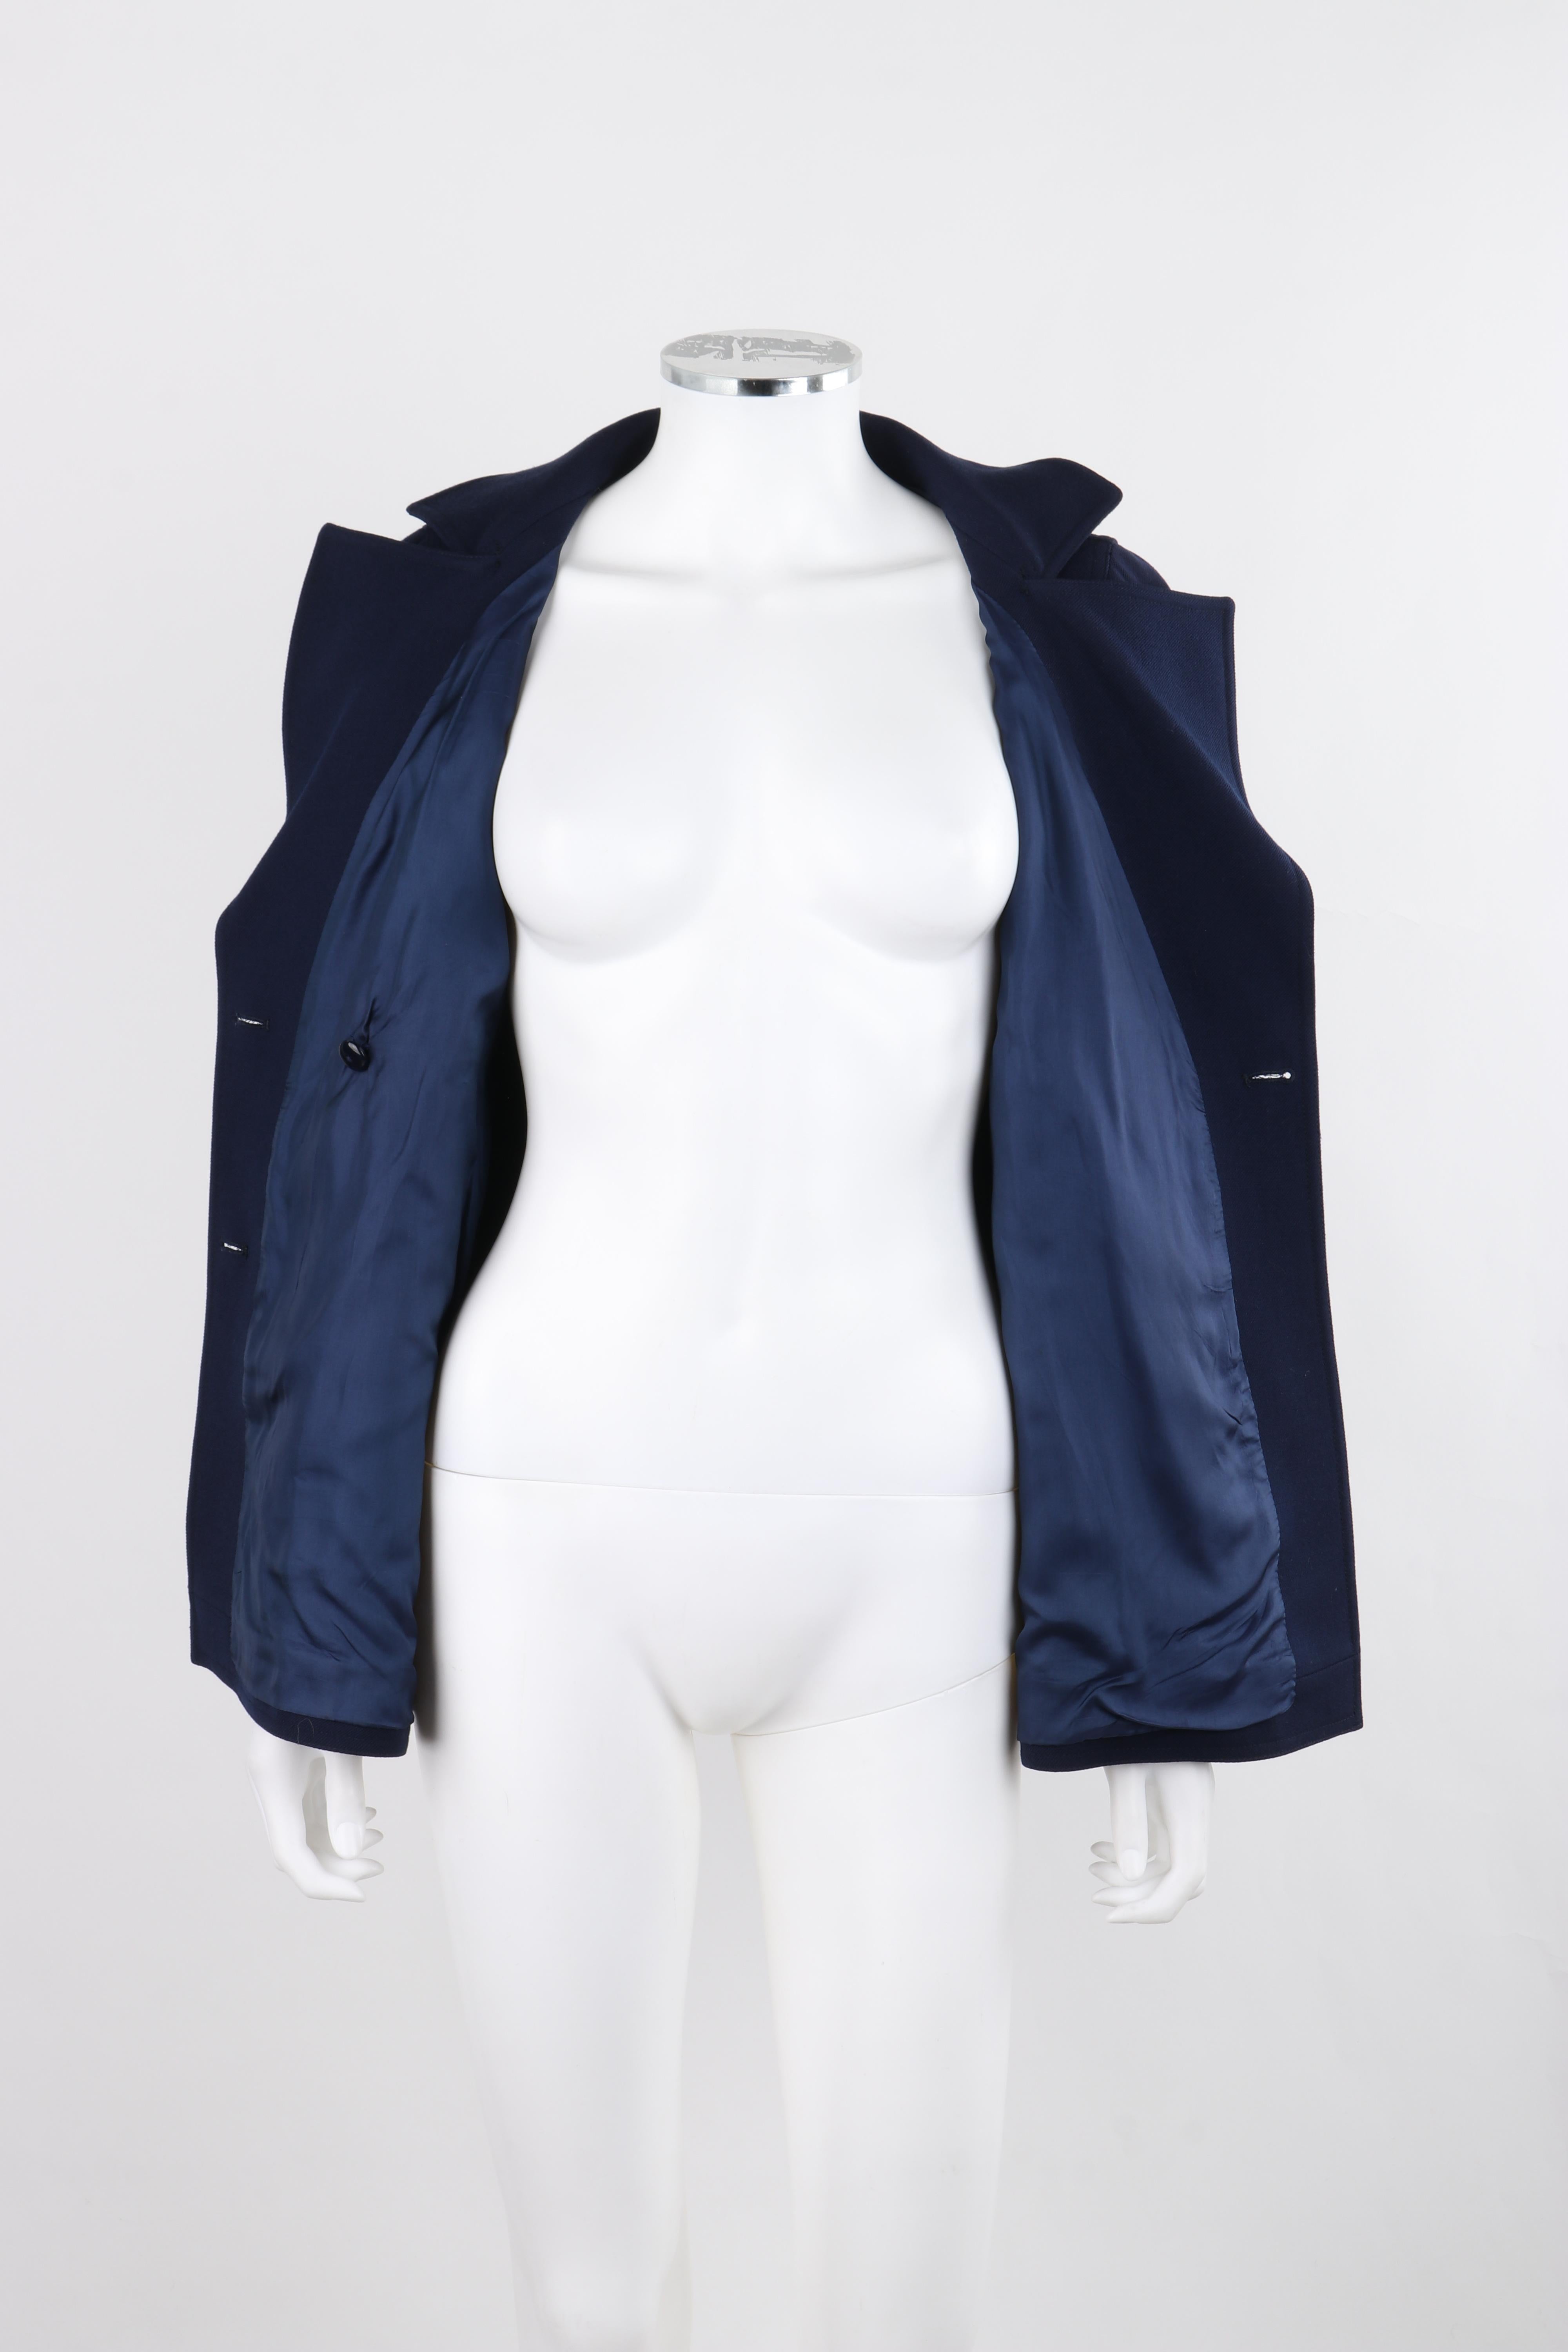 COURREGES PARIS c.1970's Vtg Navy Blue Wool Double Breasted Blazer Jacket  For Sale 6